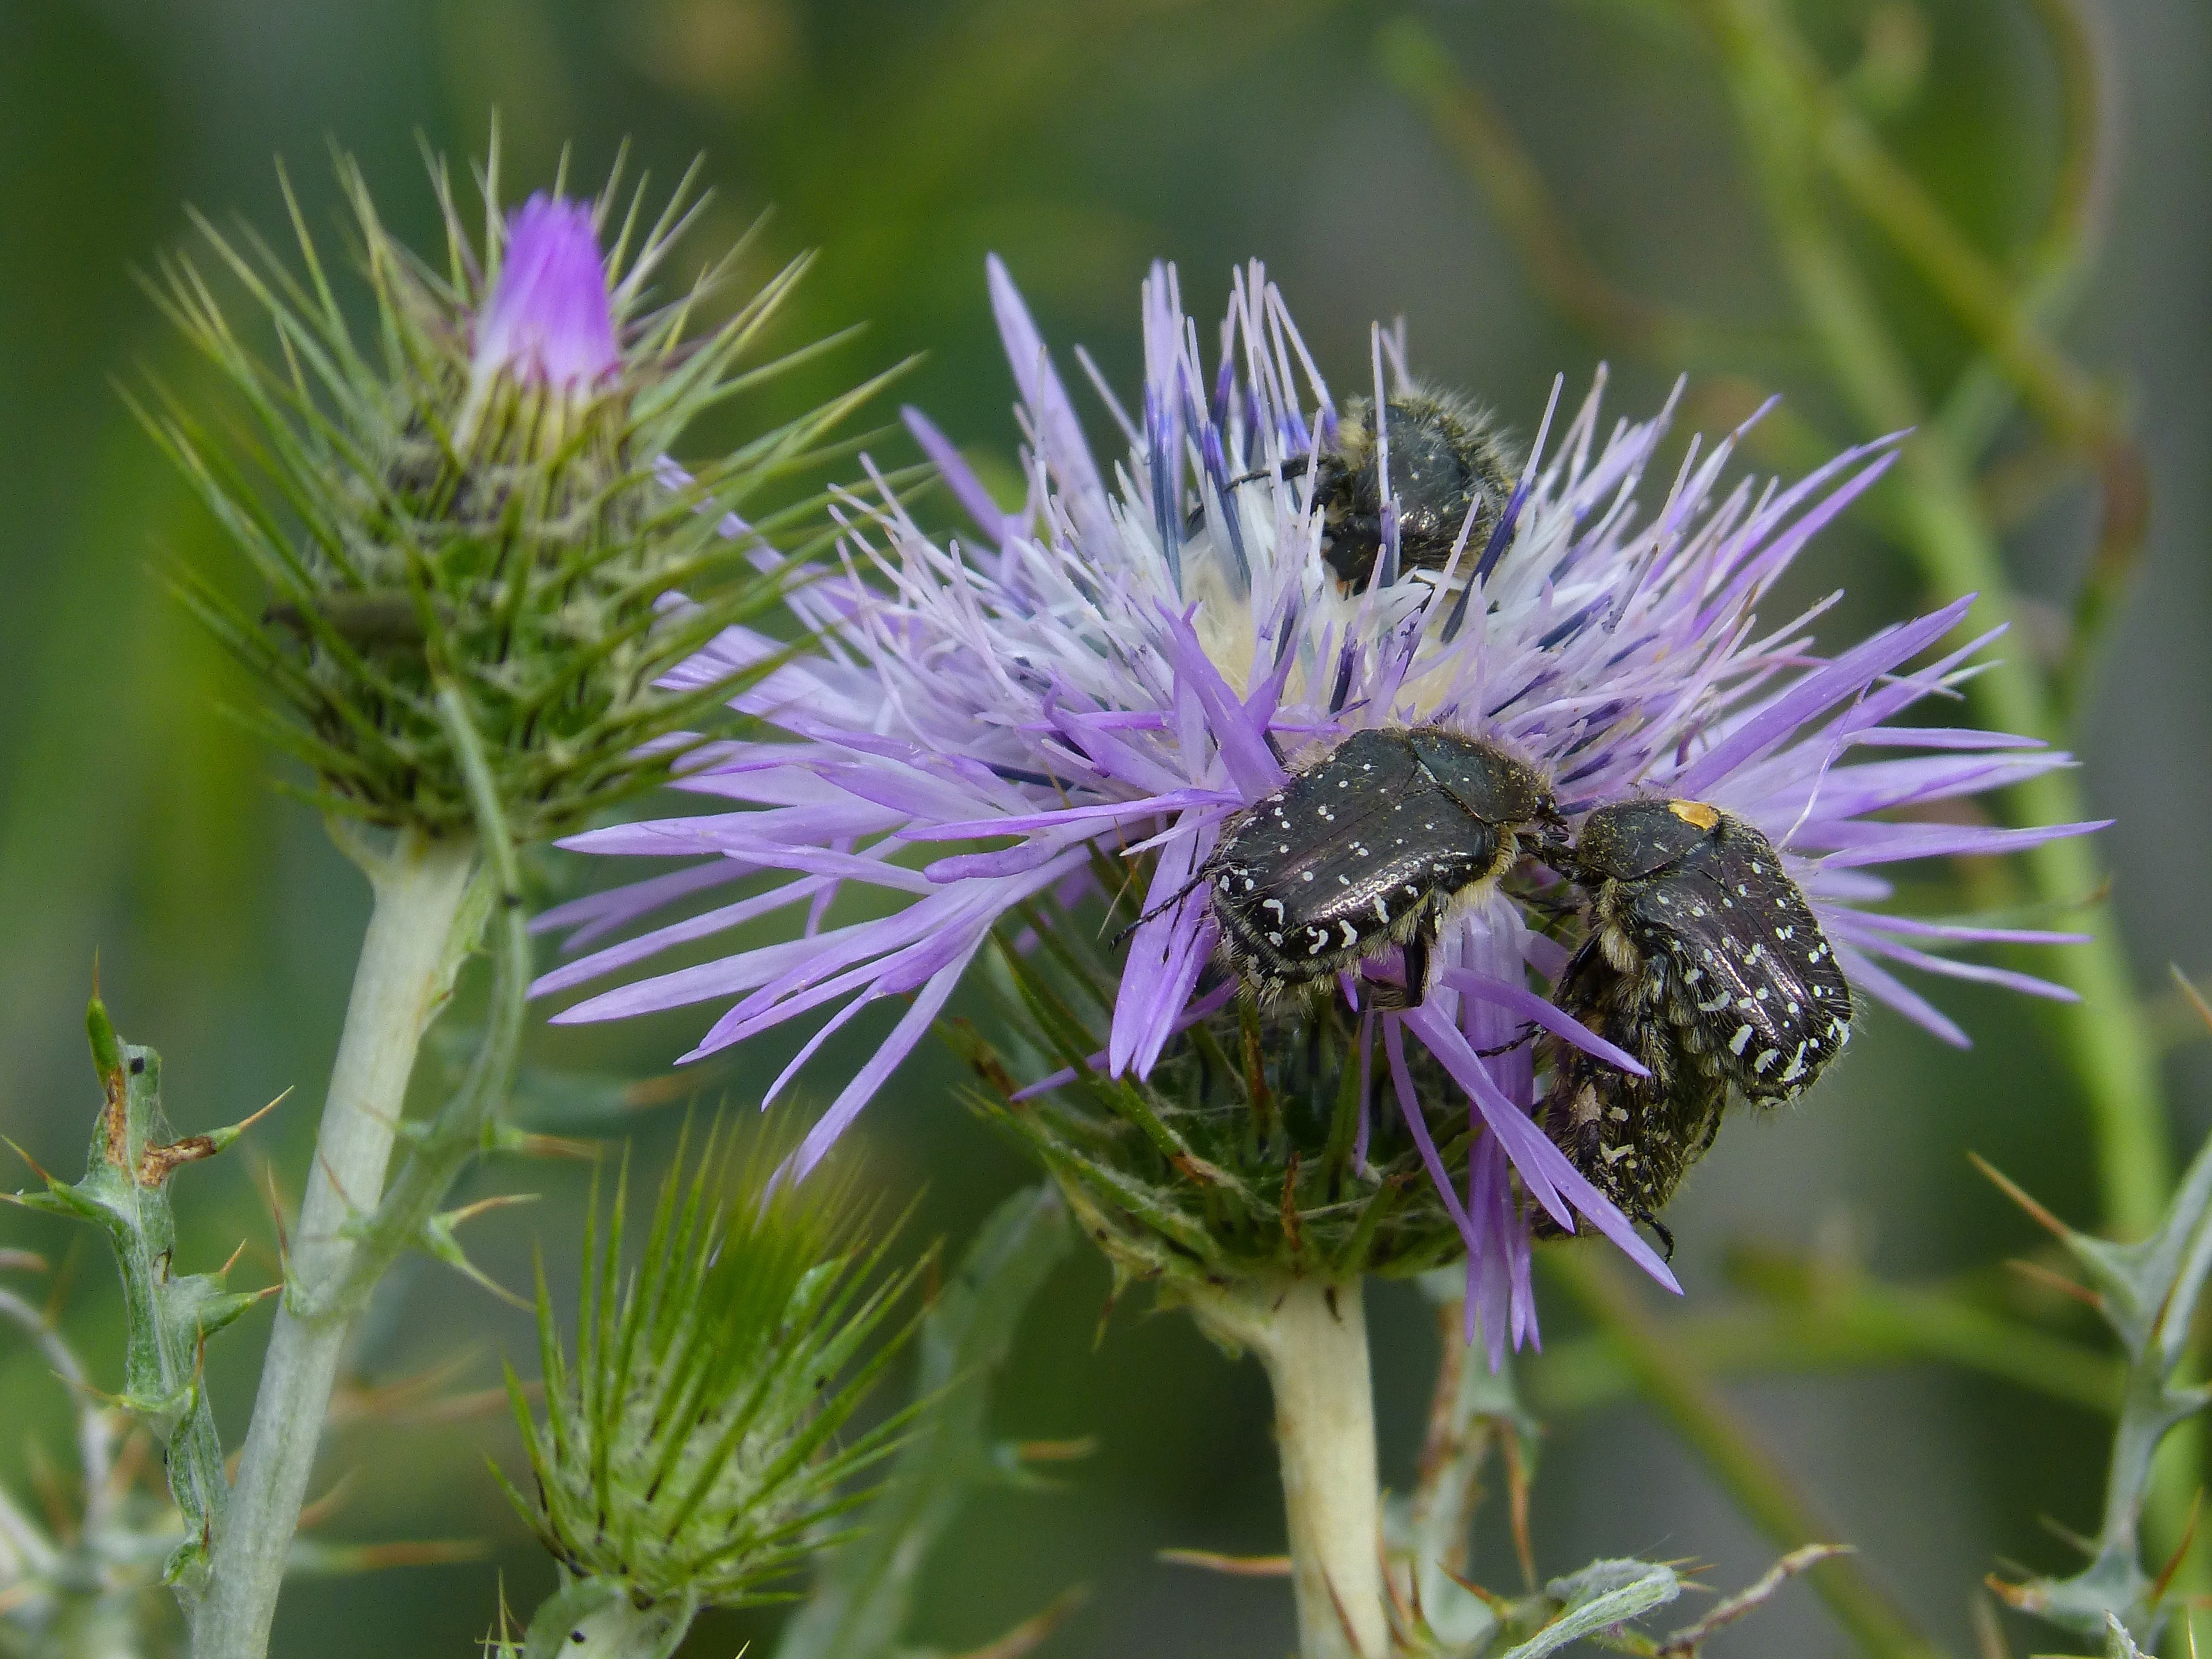 Oxythyrea Funesta, Coleoptera, Beetle, purple, flower